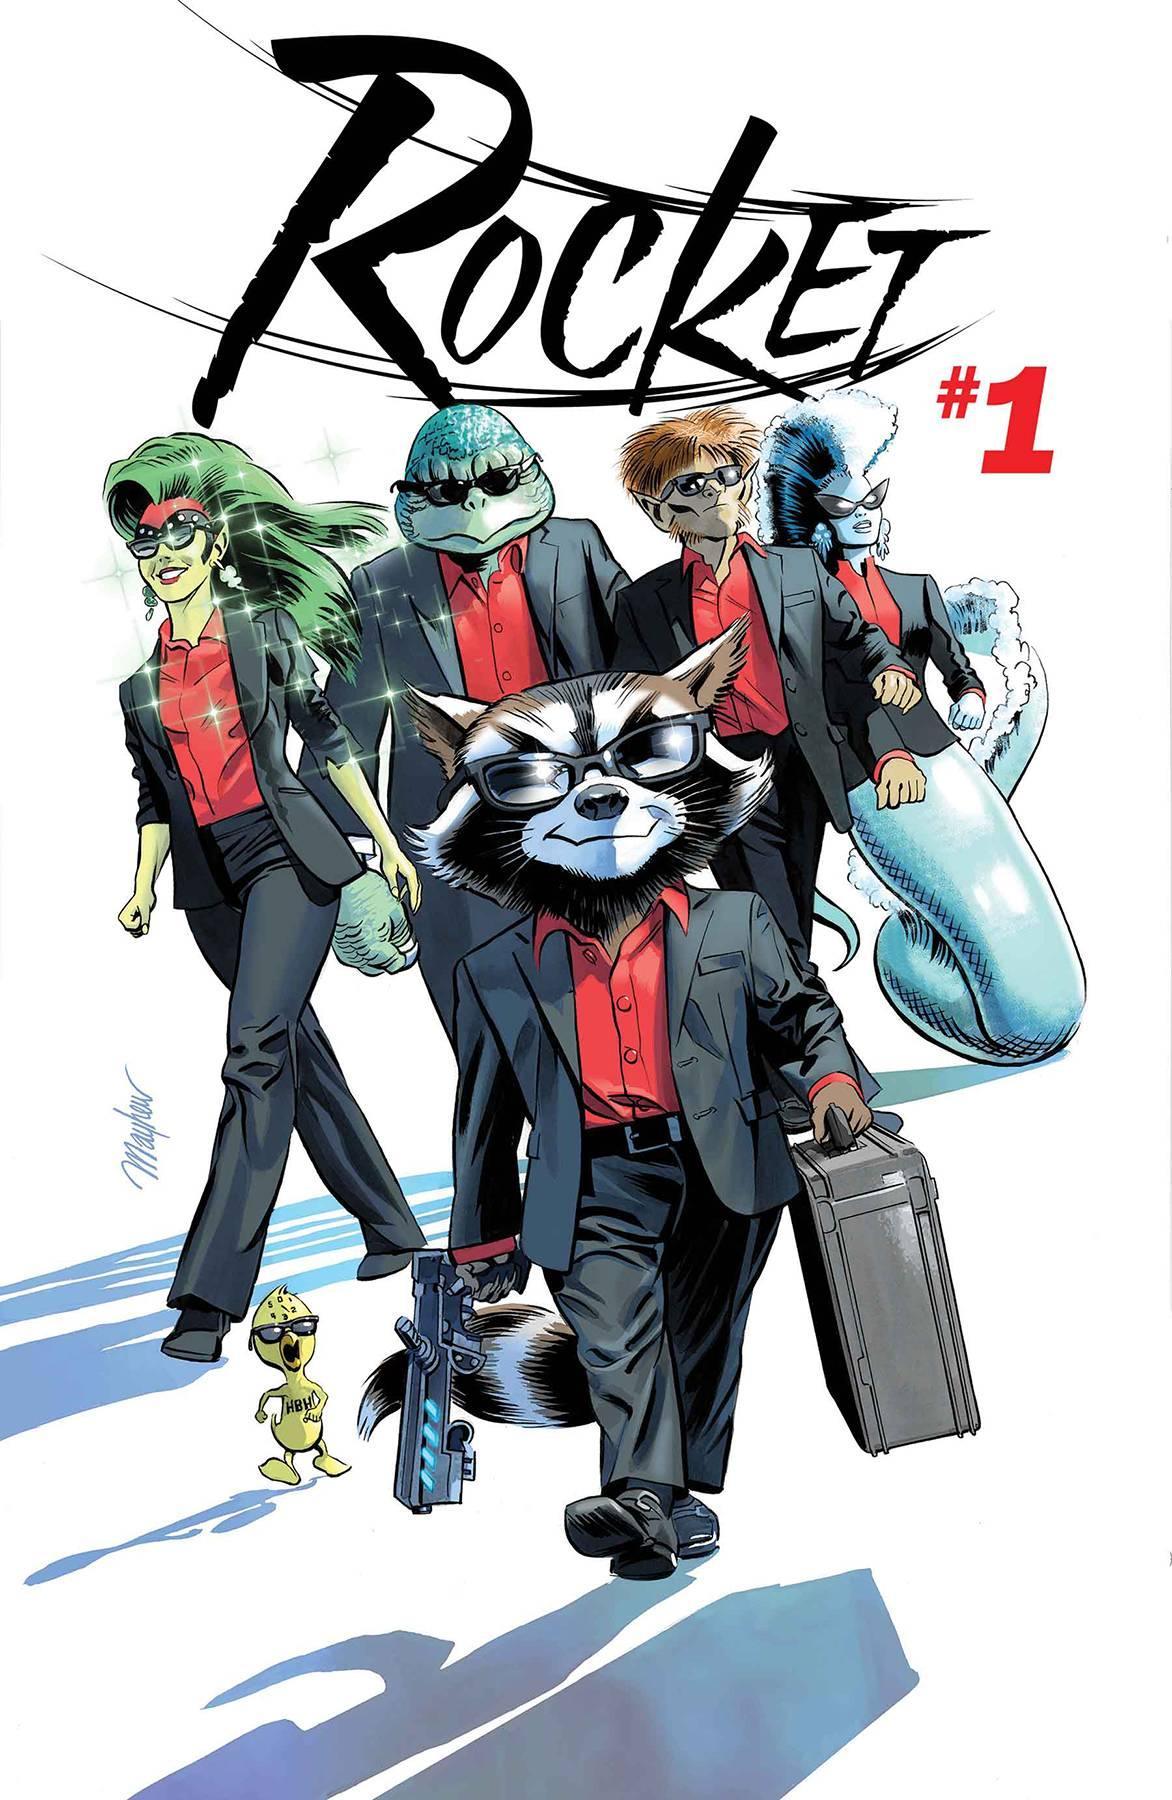 ROCKET #1 - Kings Comics